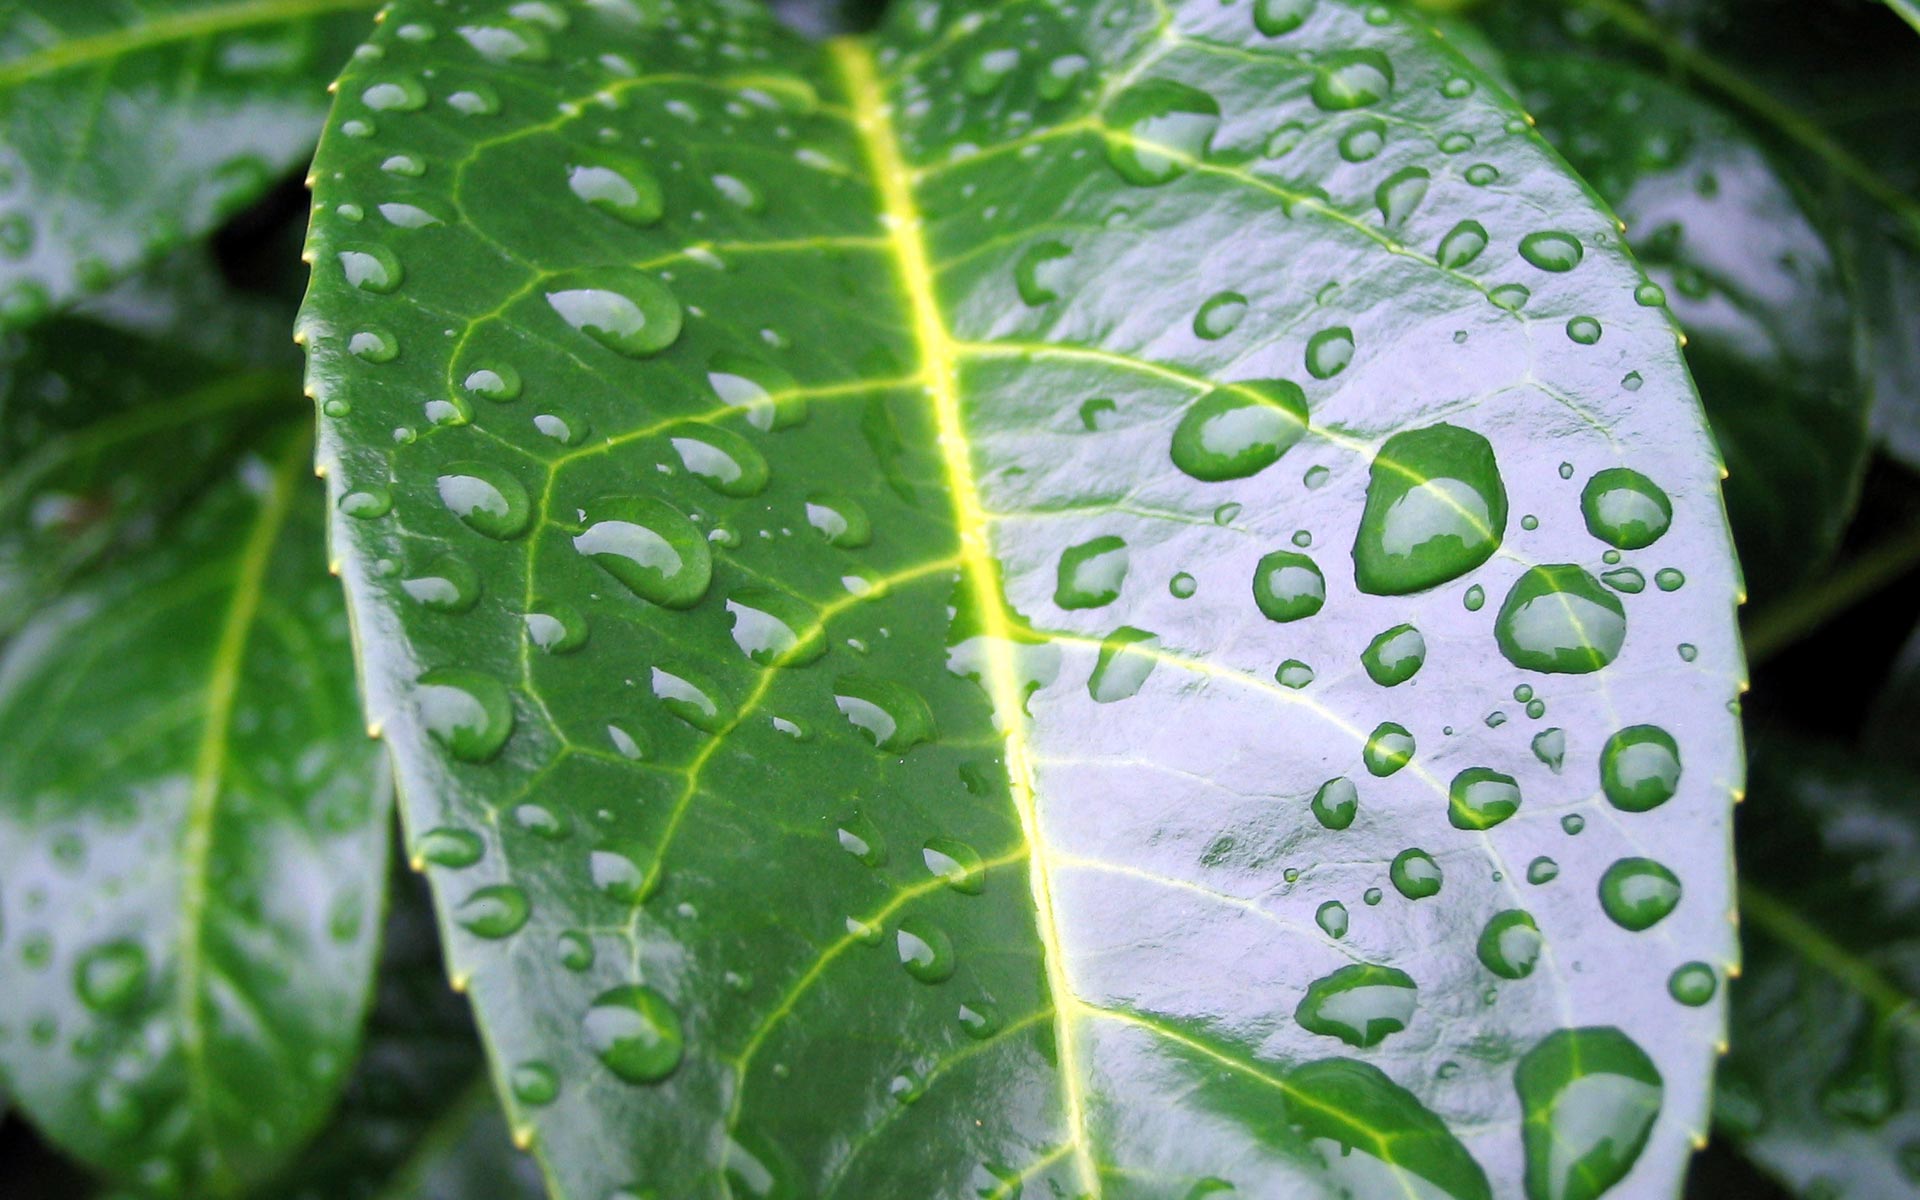 Dew drops glistening on a close-up leaf